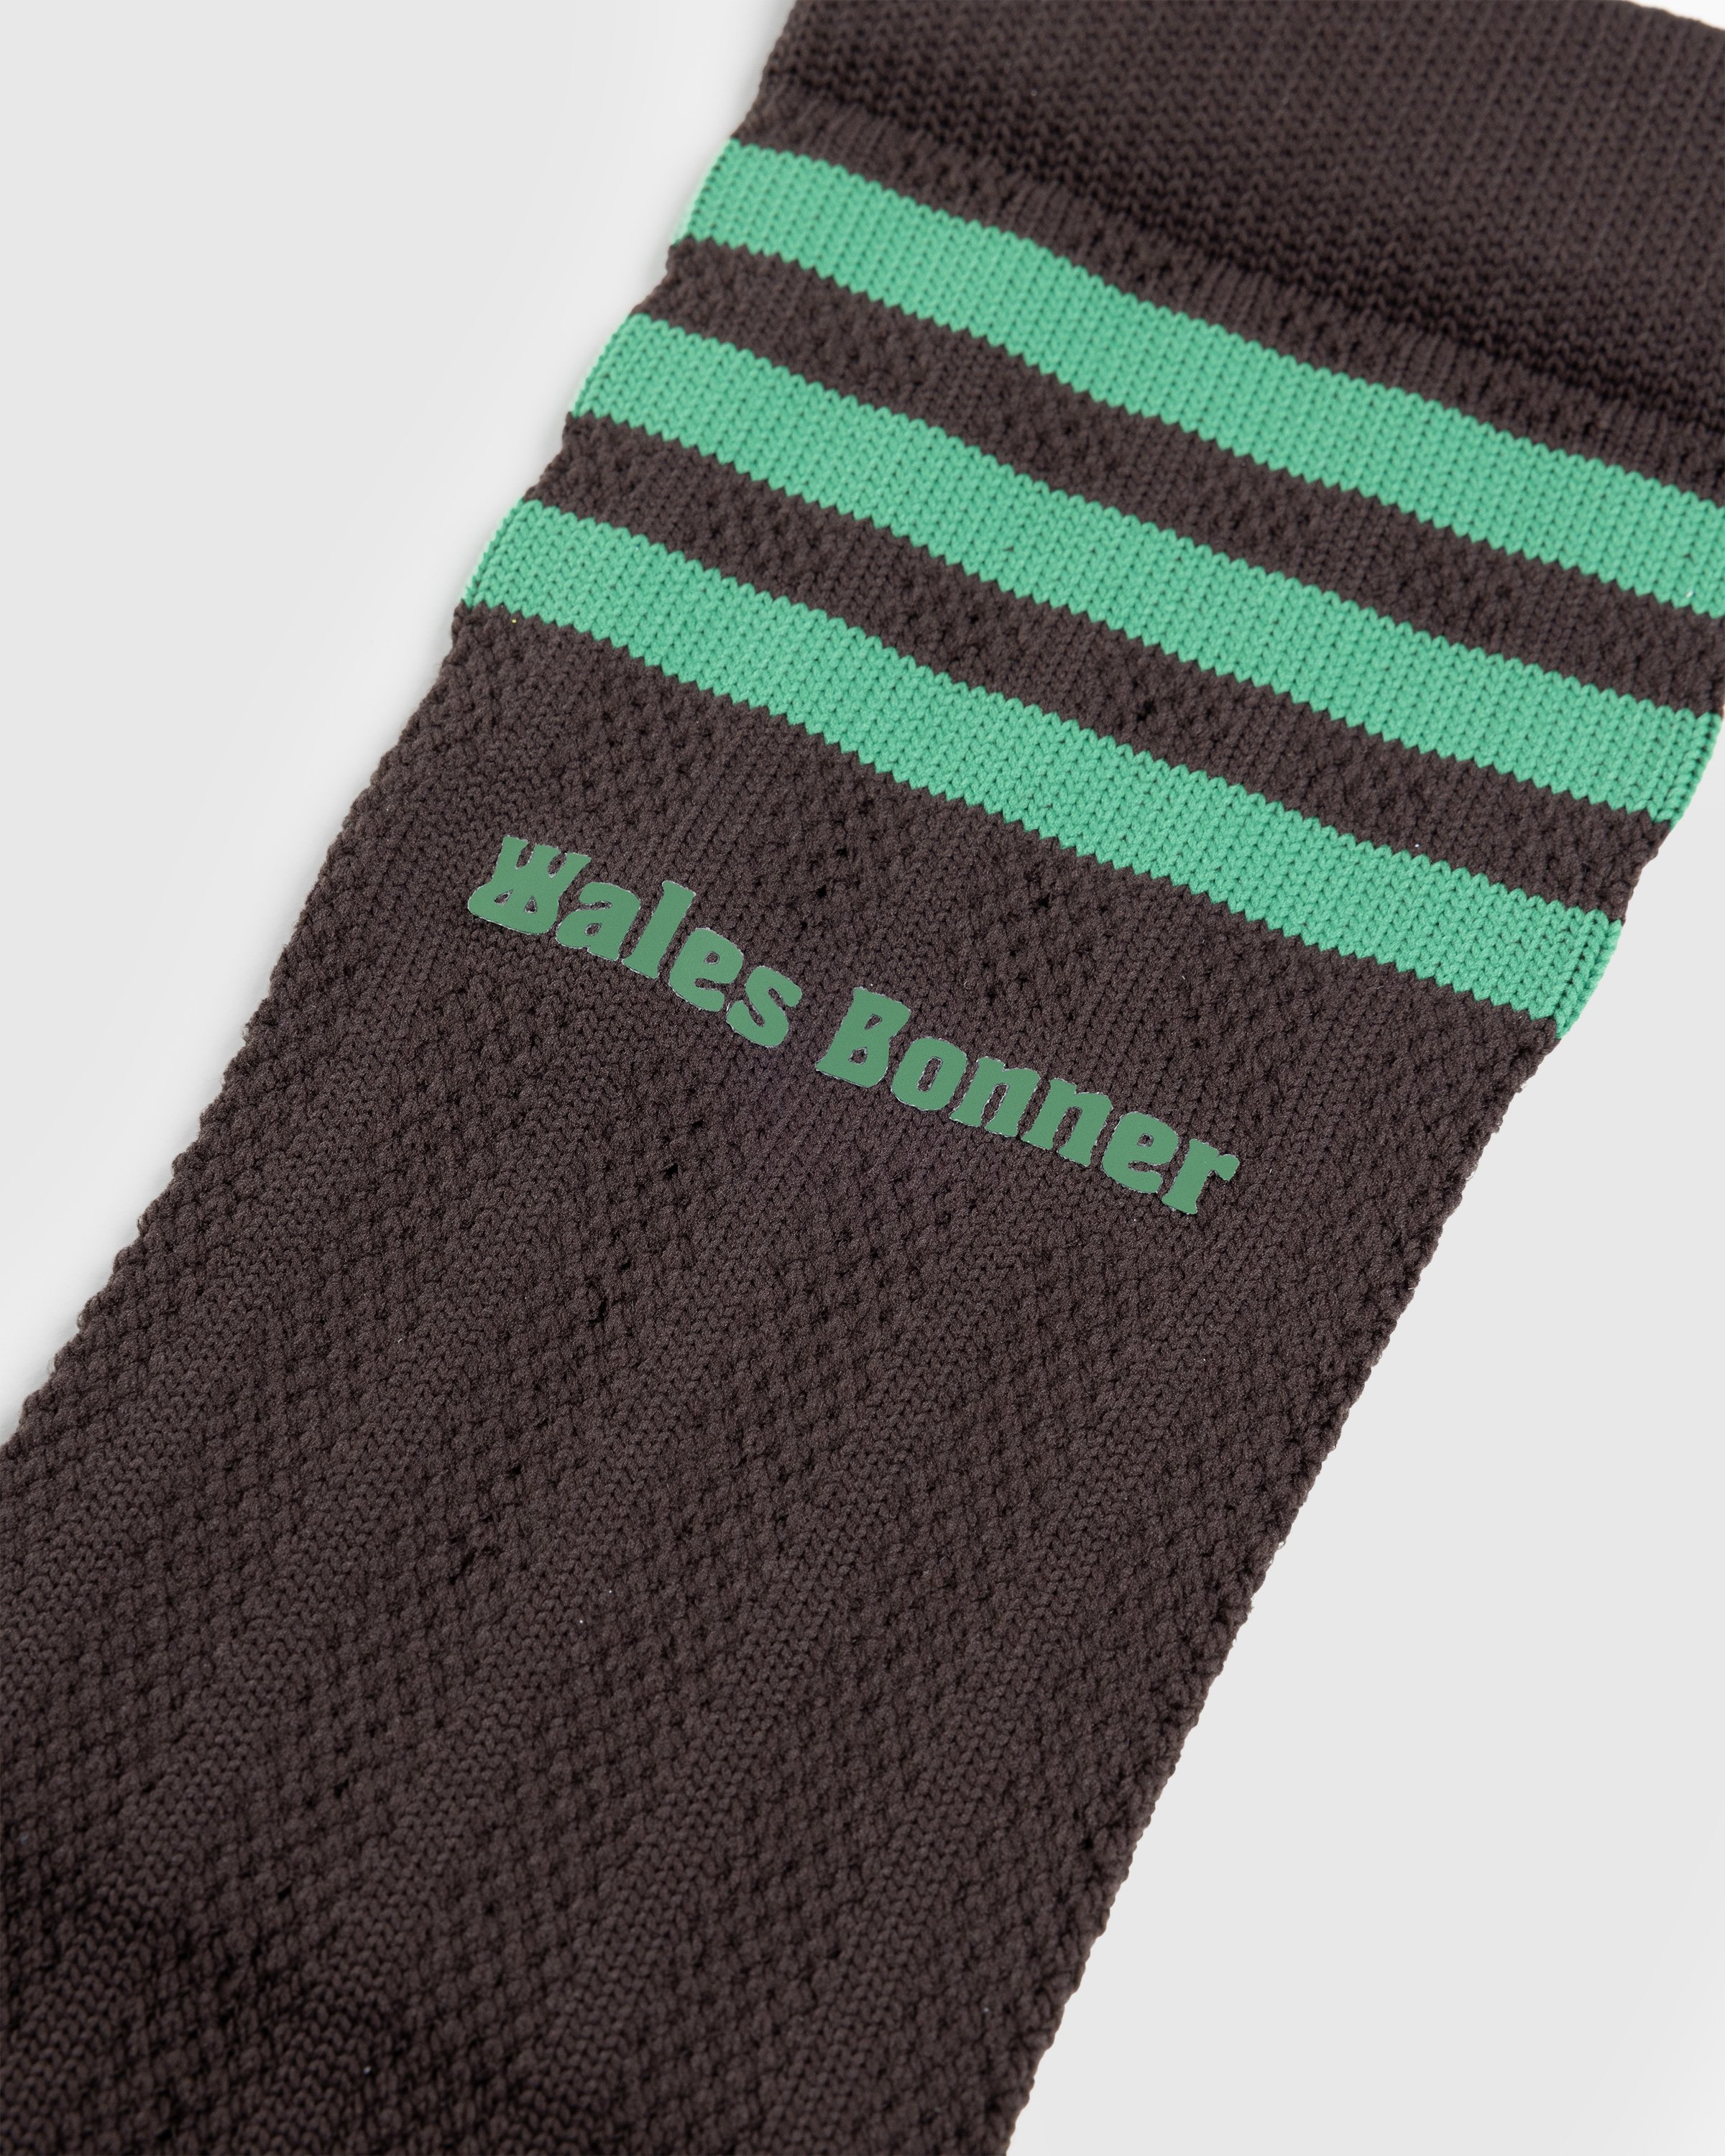 Adidas x Wales Bonner - Crochet Socks Three-Pack Multi - Accessories - Multi - Image 6